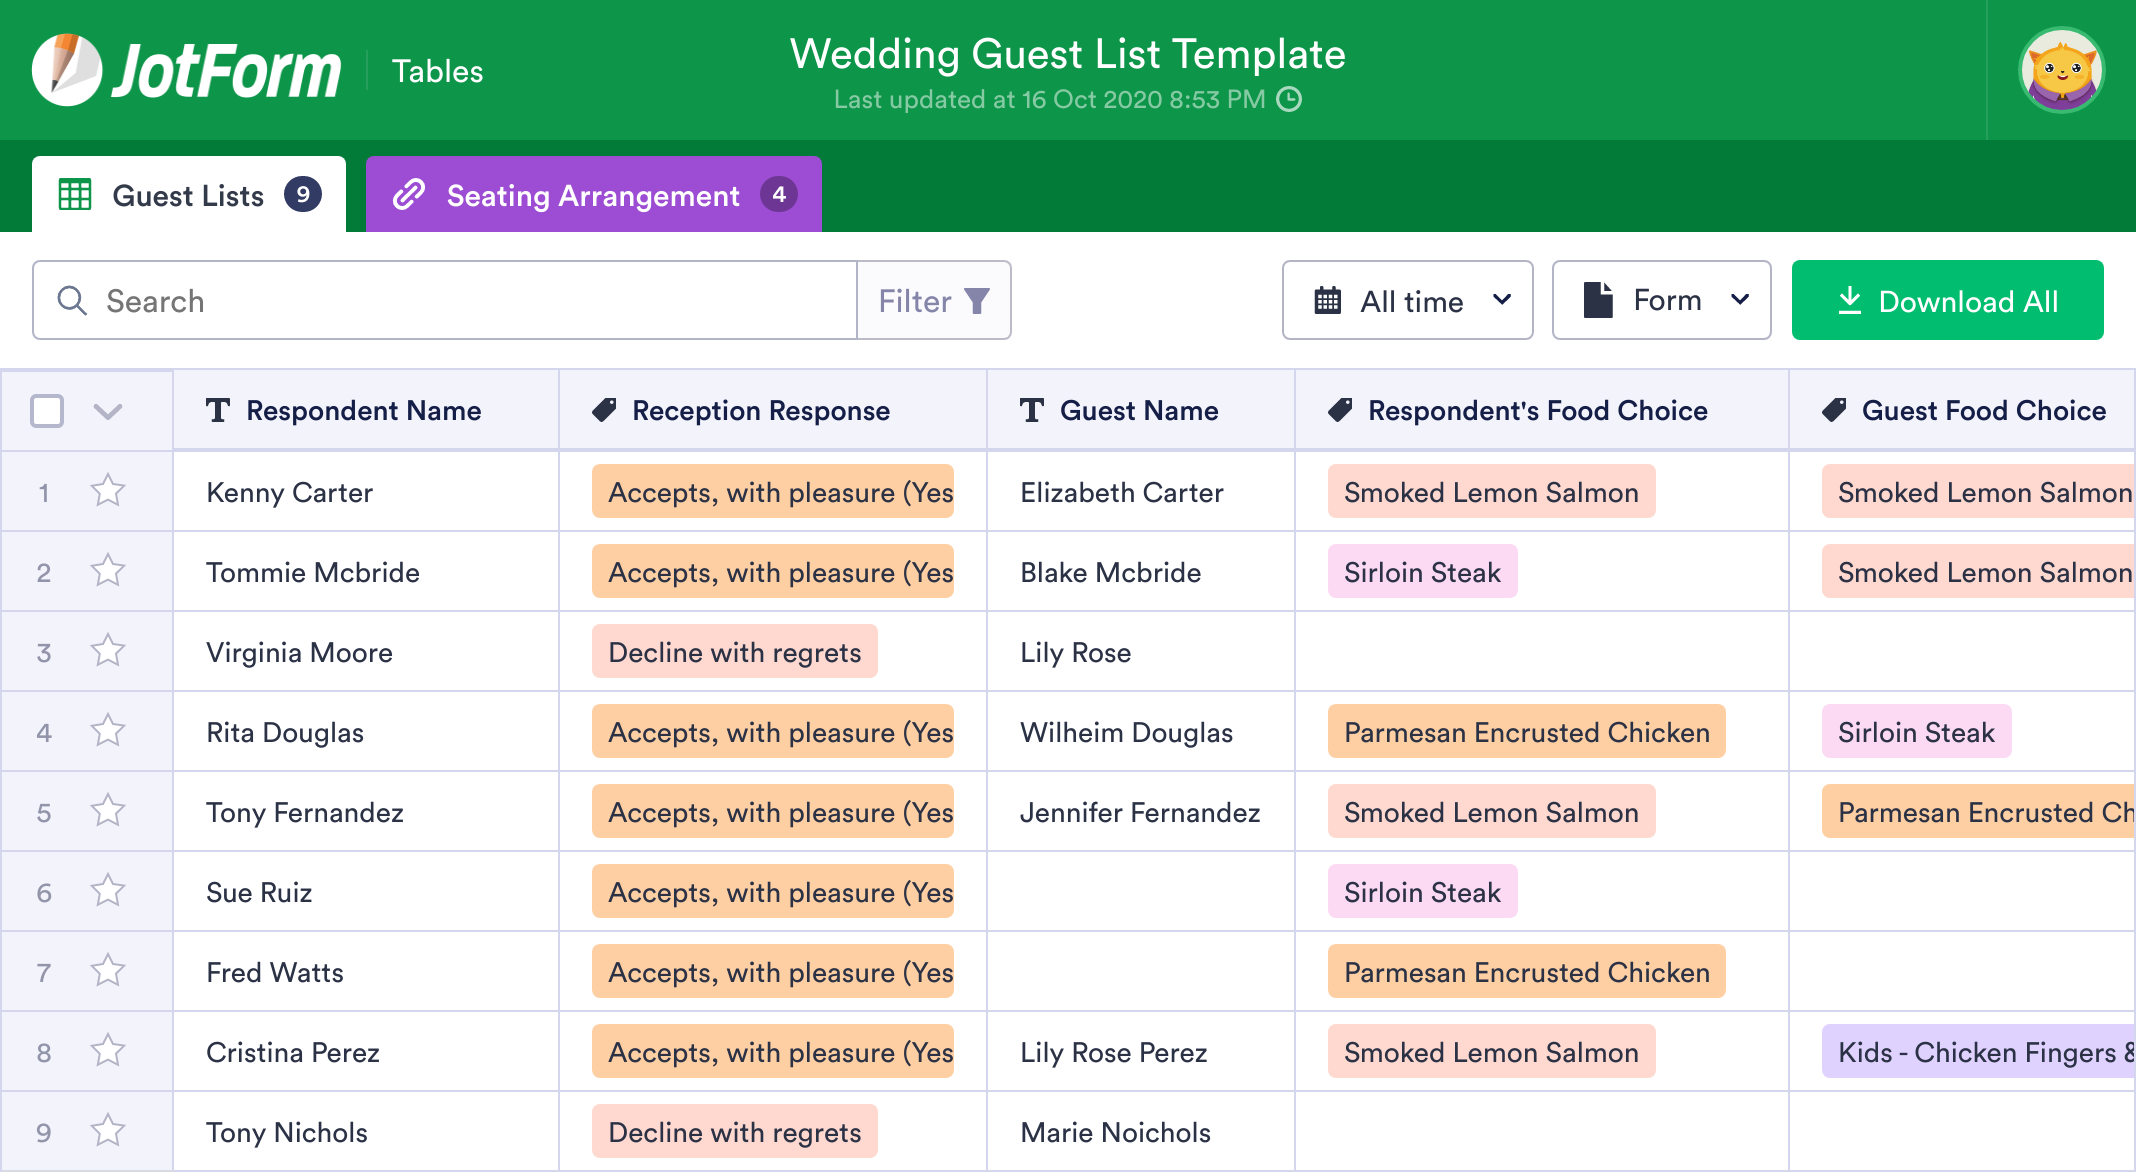 Wedding Guest List Template | JotForm Tables